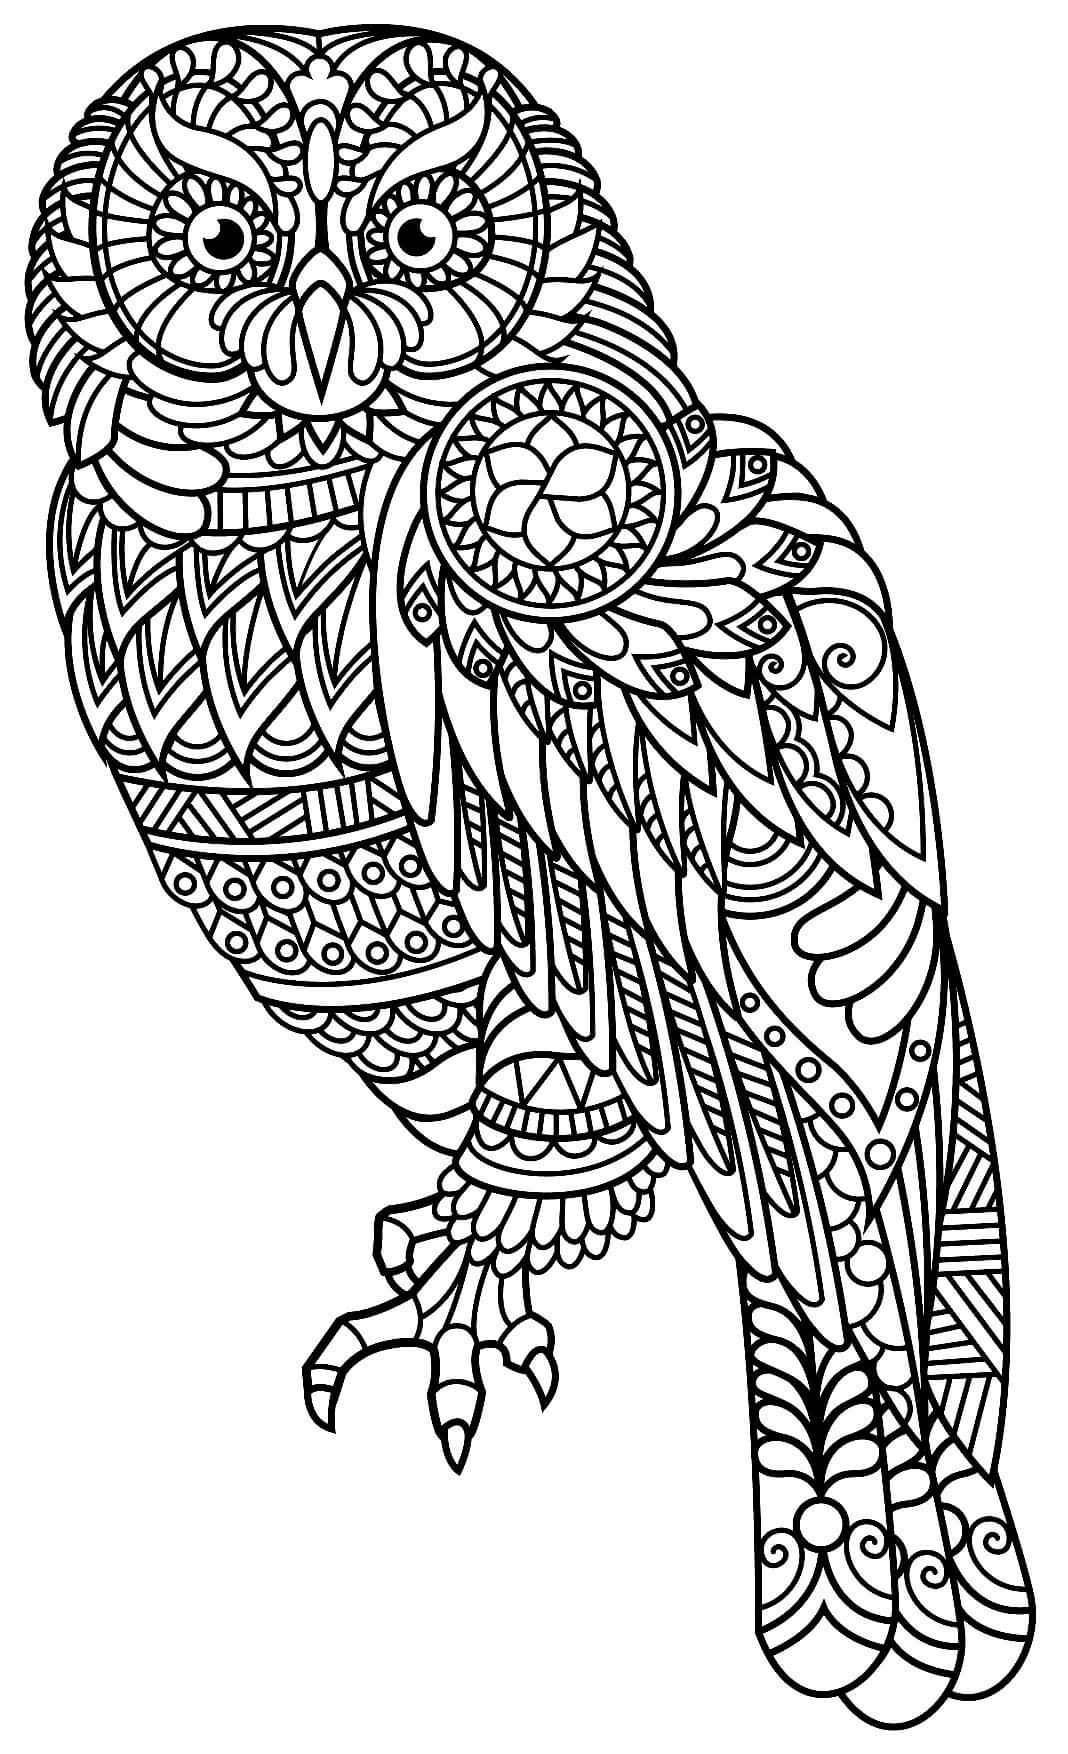 Mandala Owl Coloring Page - Sheet 5 Mandalas